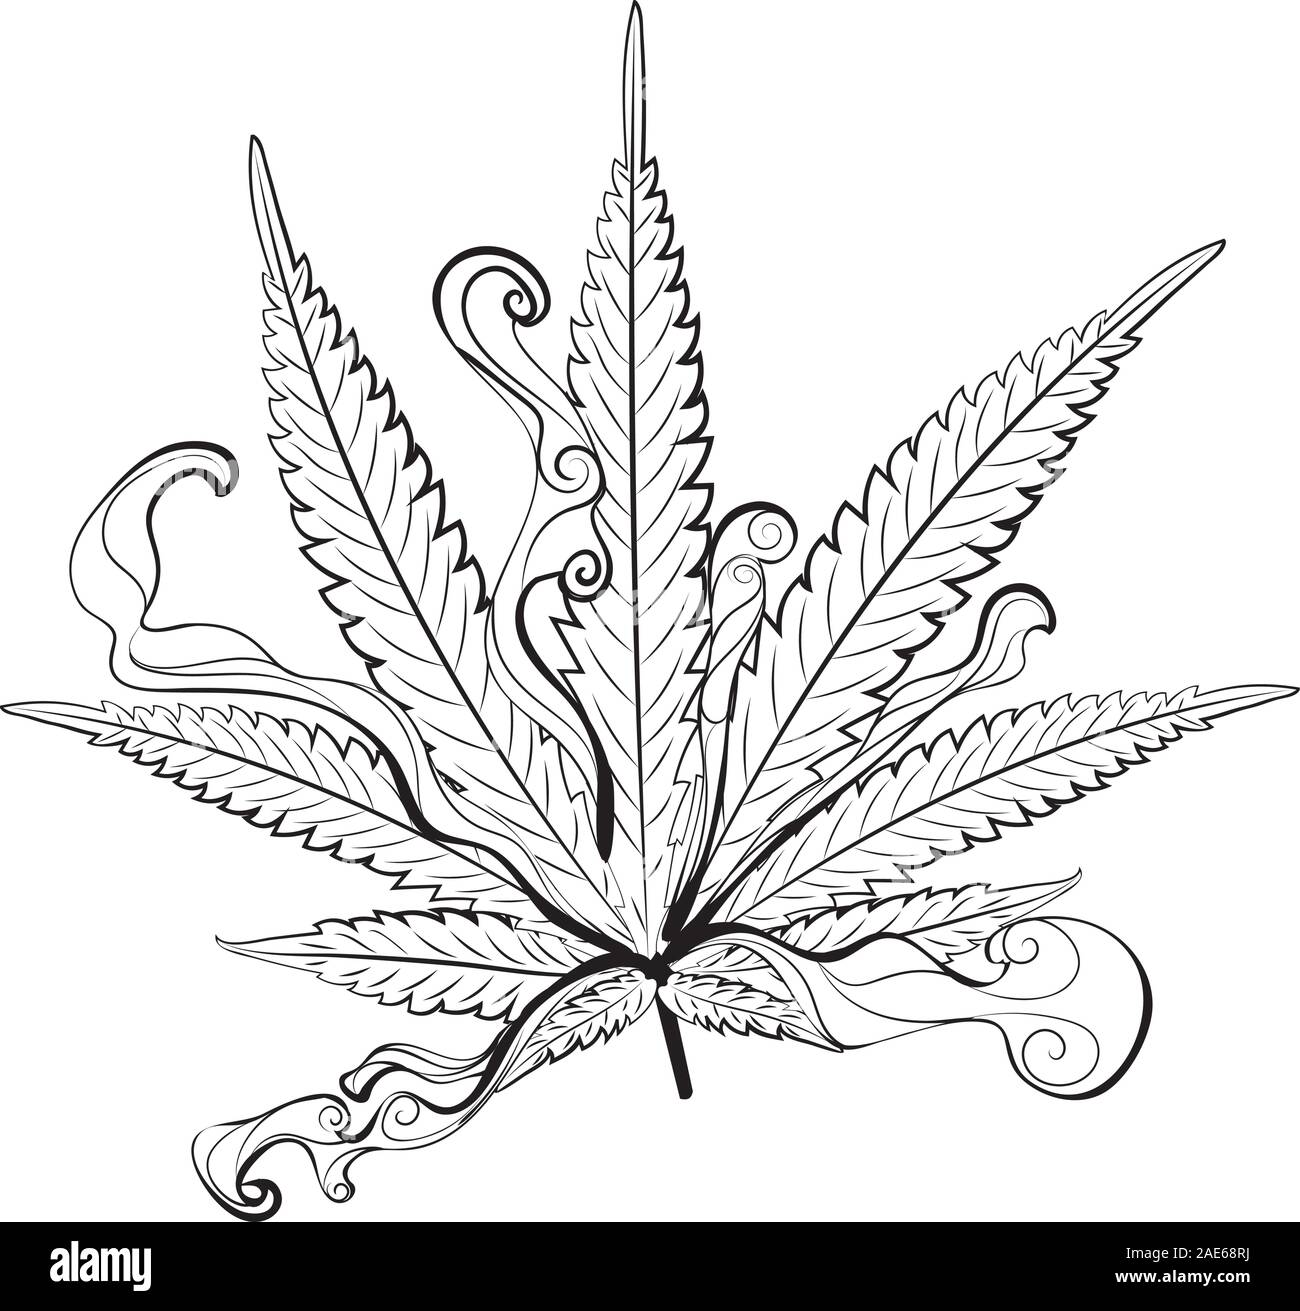 Decorative leaf of marijuana plant in black and white design Stock ...